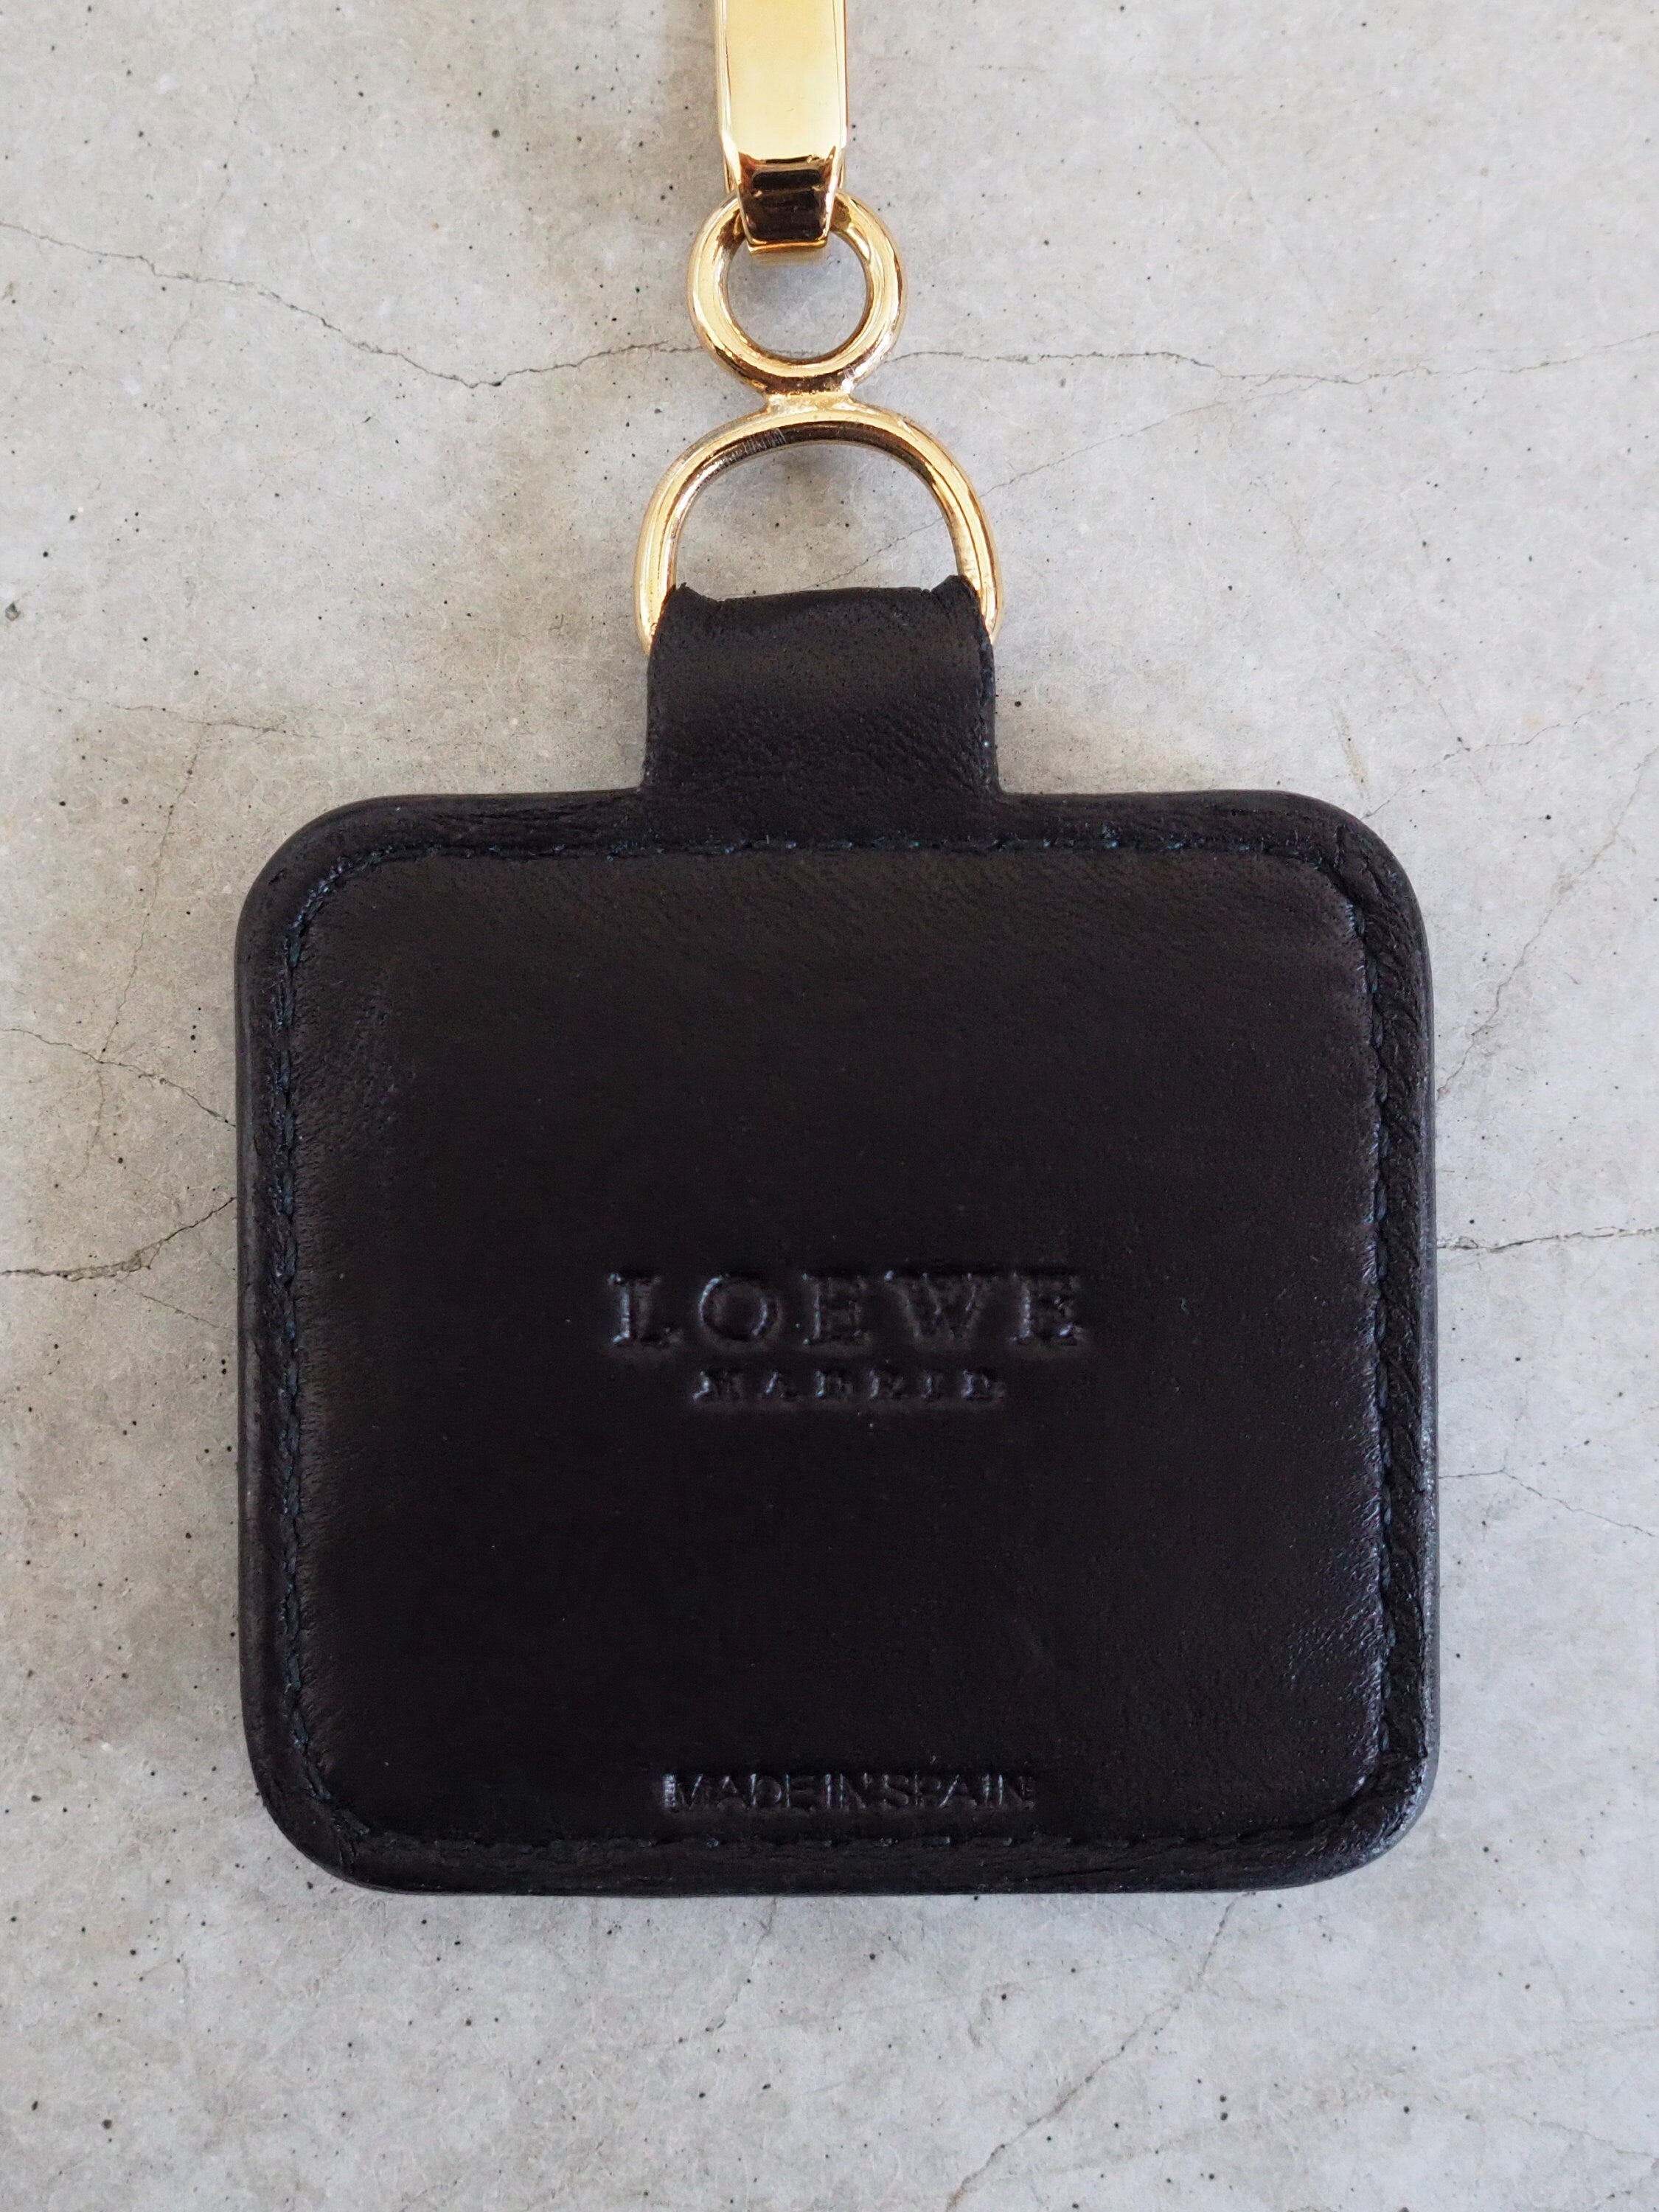 LOEWE Key Charm Chain Holder Gold Metal Black Leather Vintage Authentic